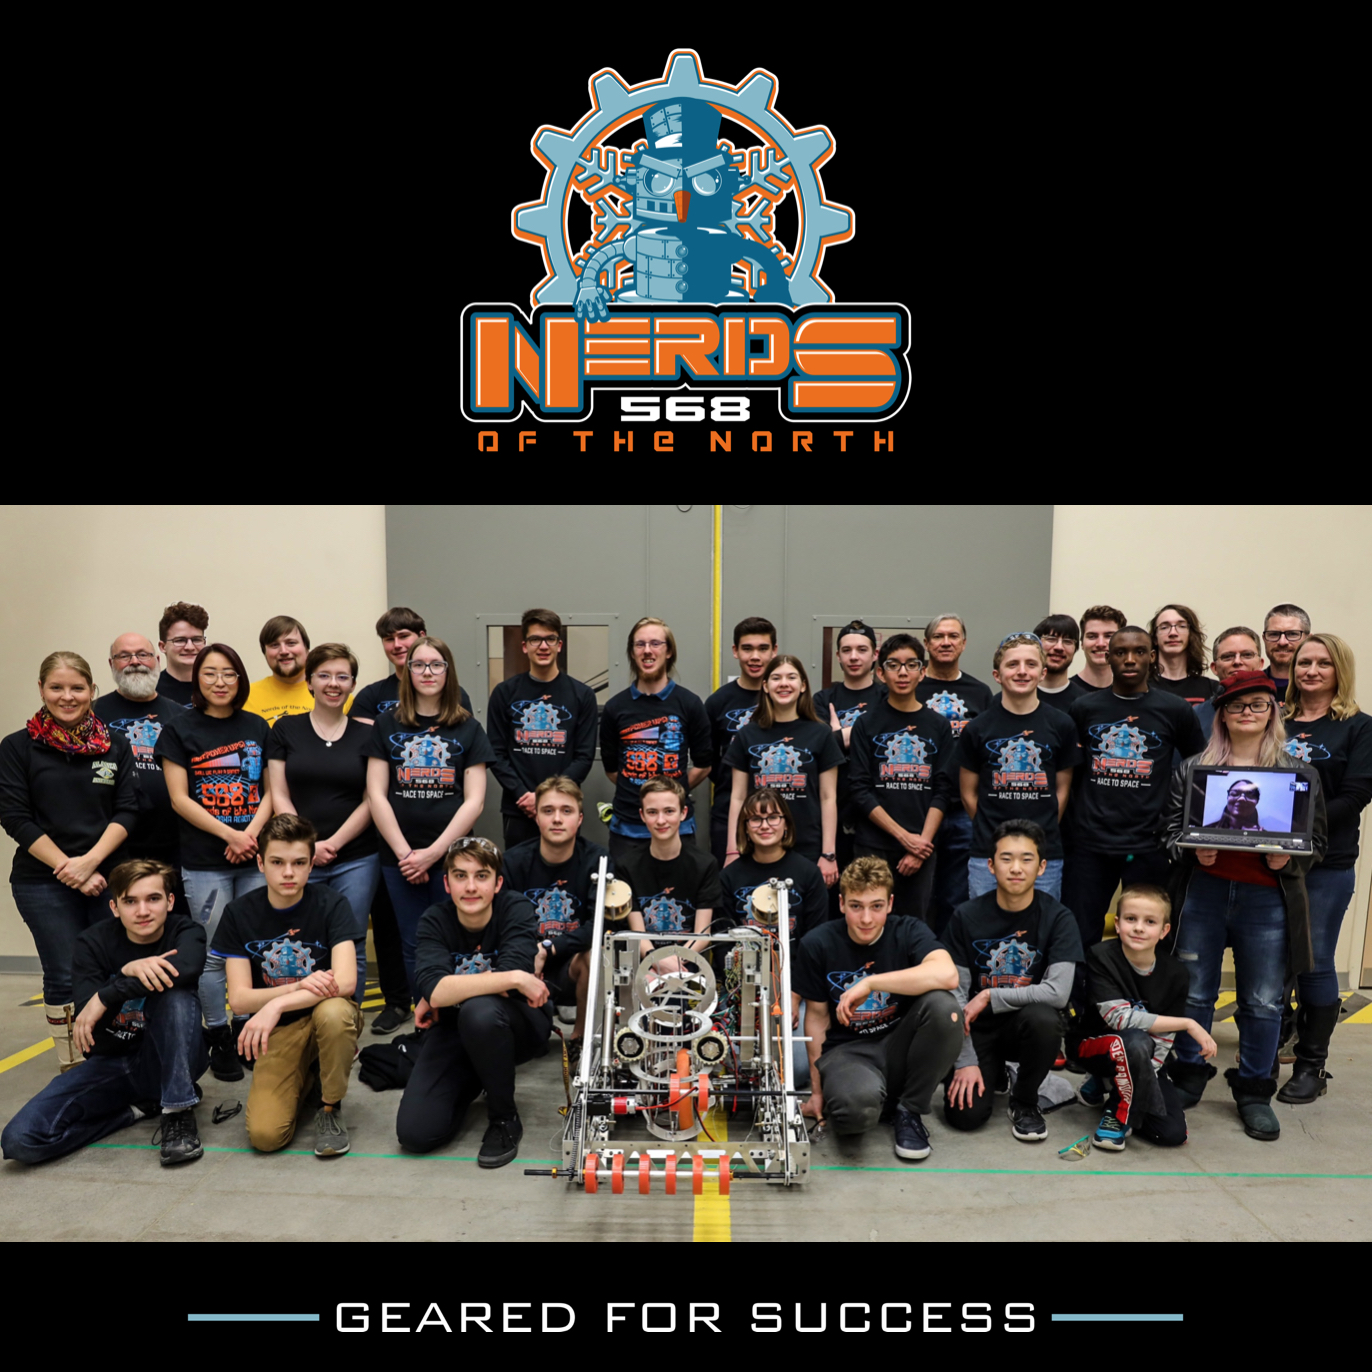 group photo of robotics team with robot